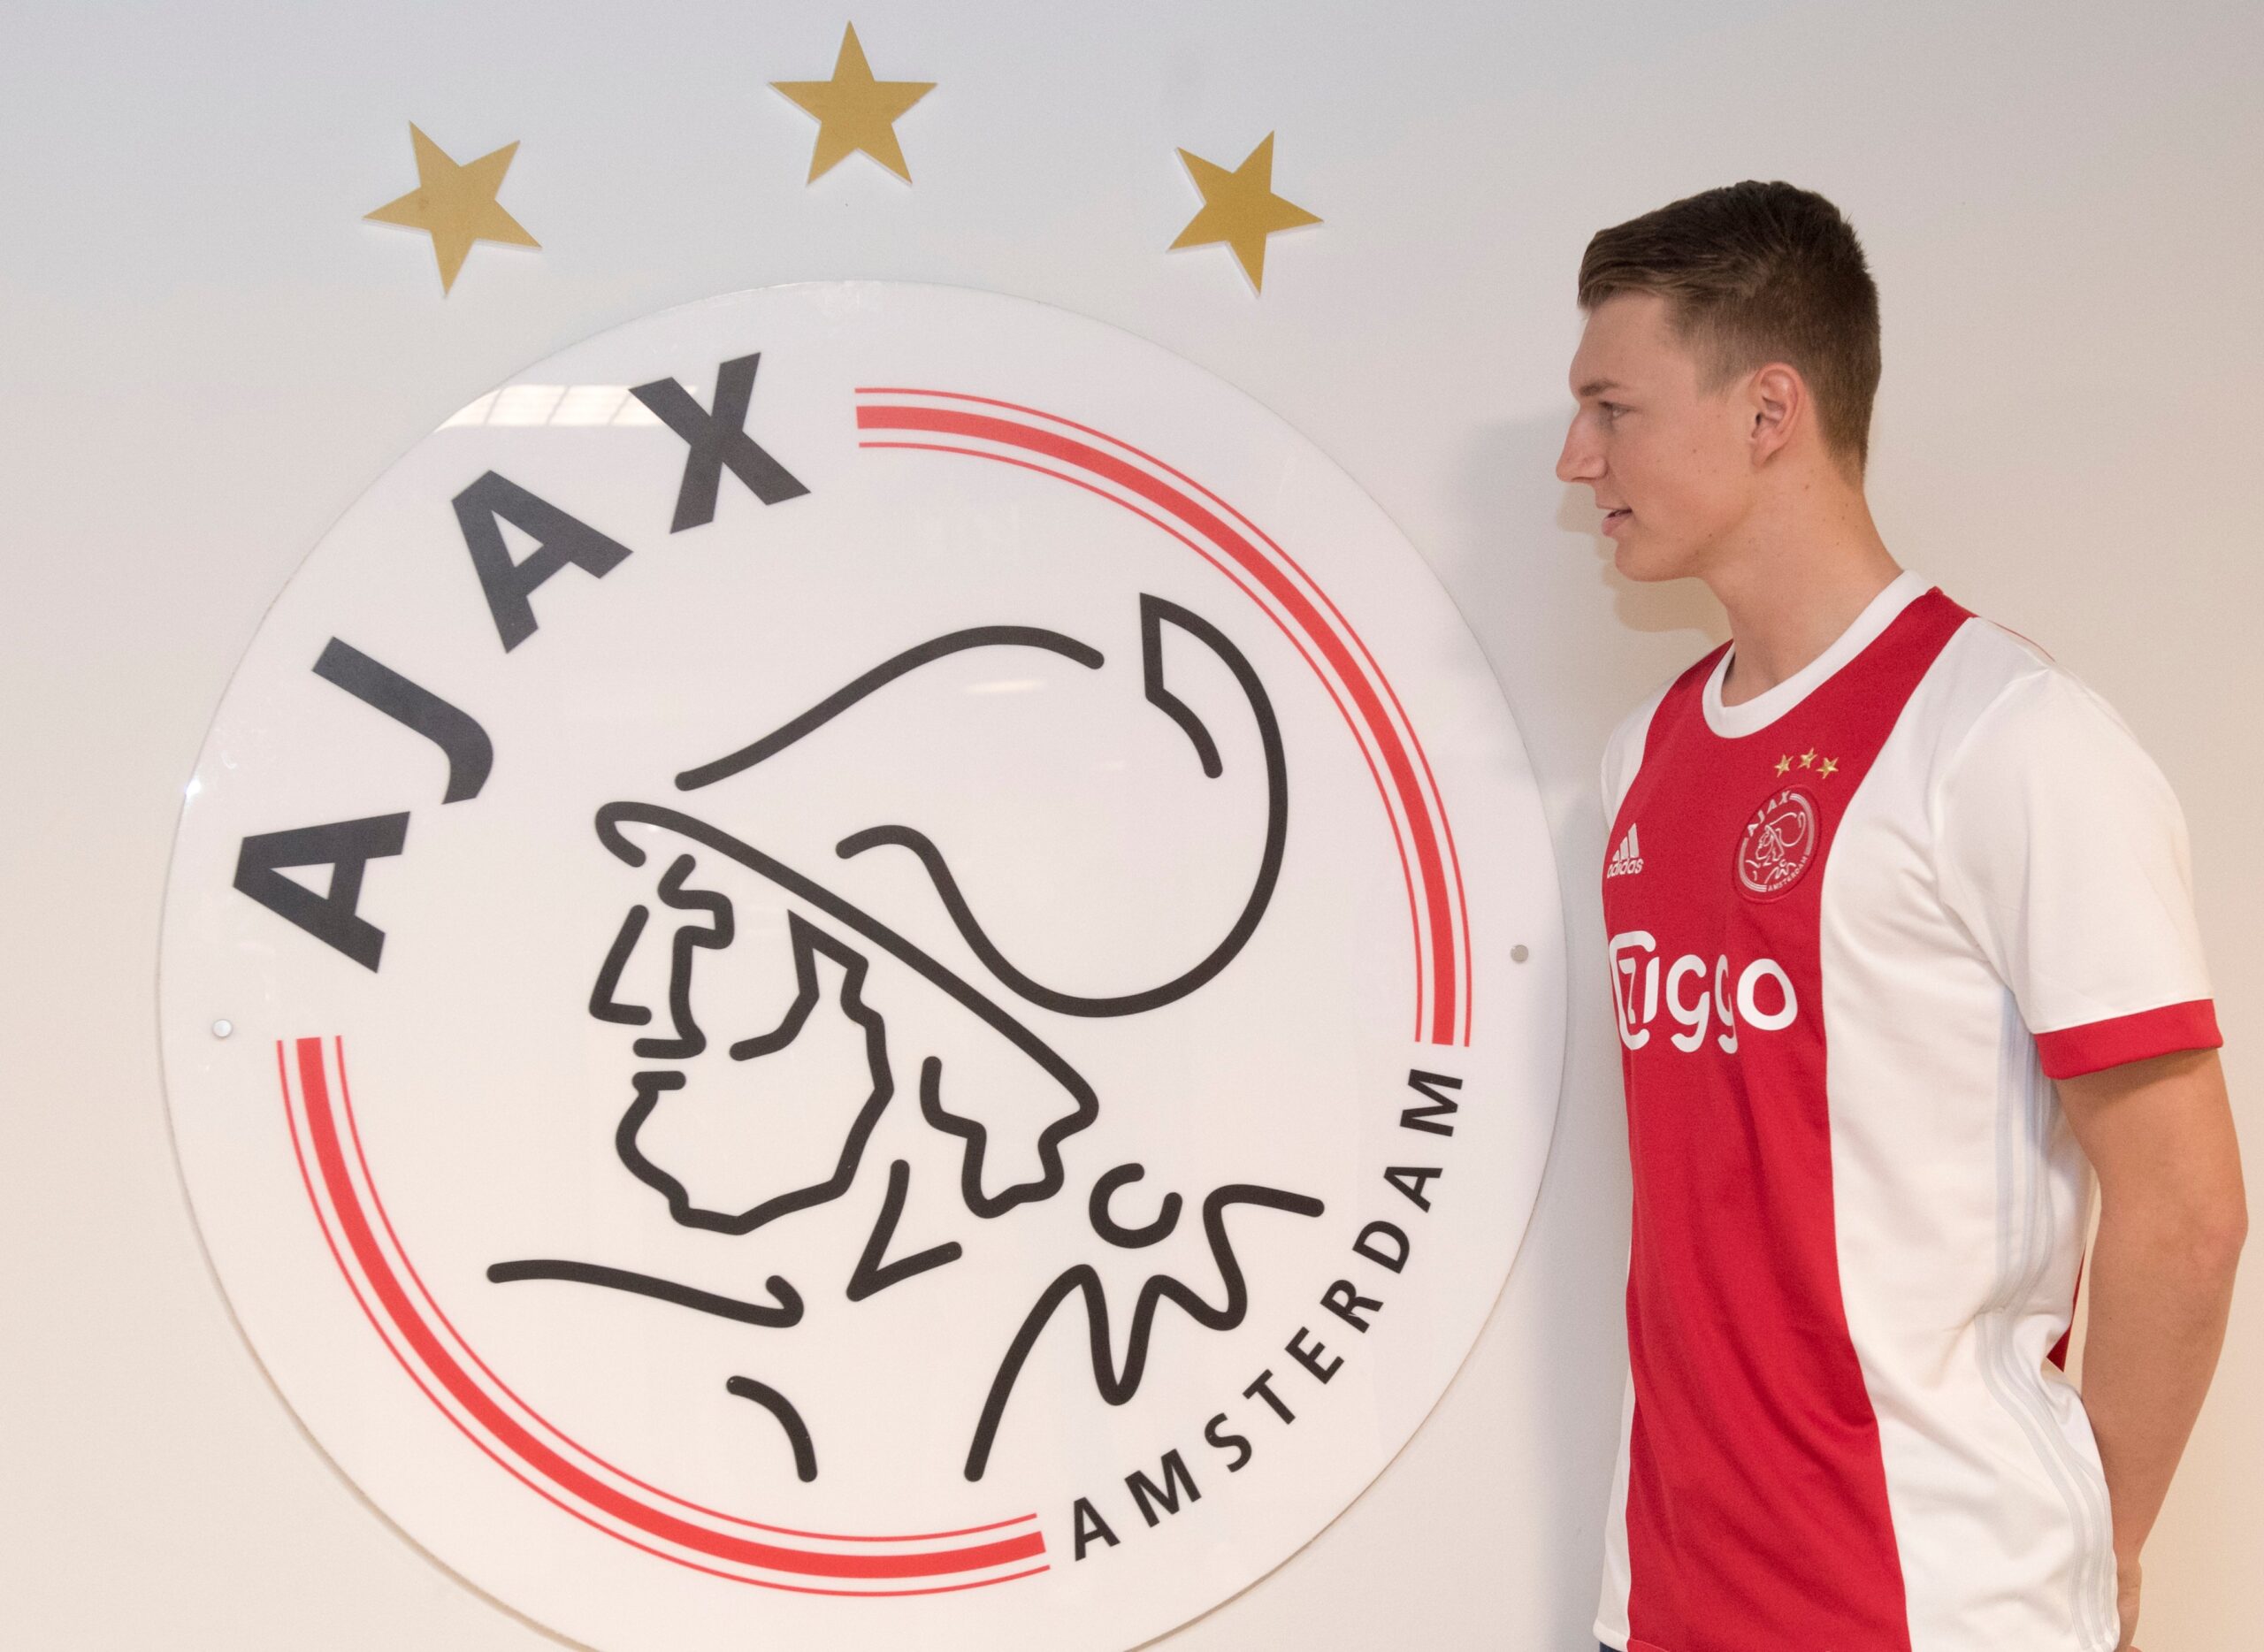 fonte immagine: Twitter ufficiale Ajax